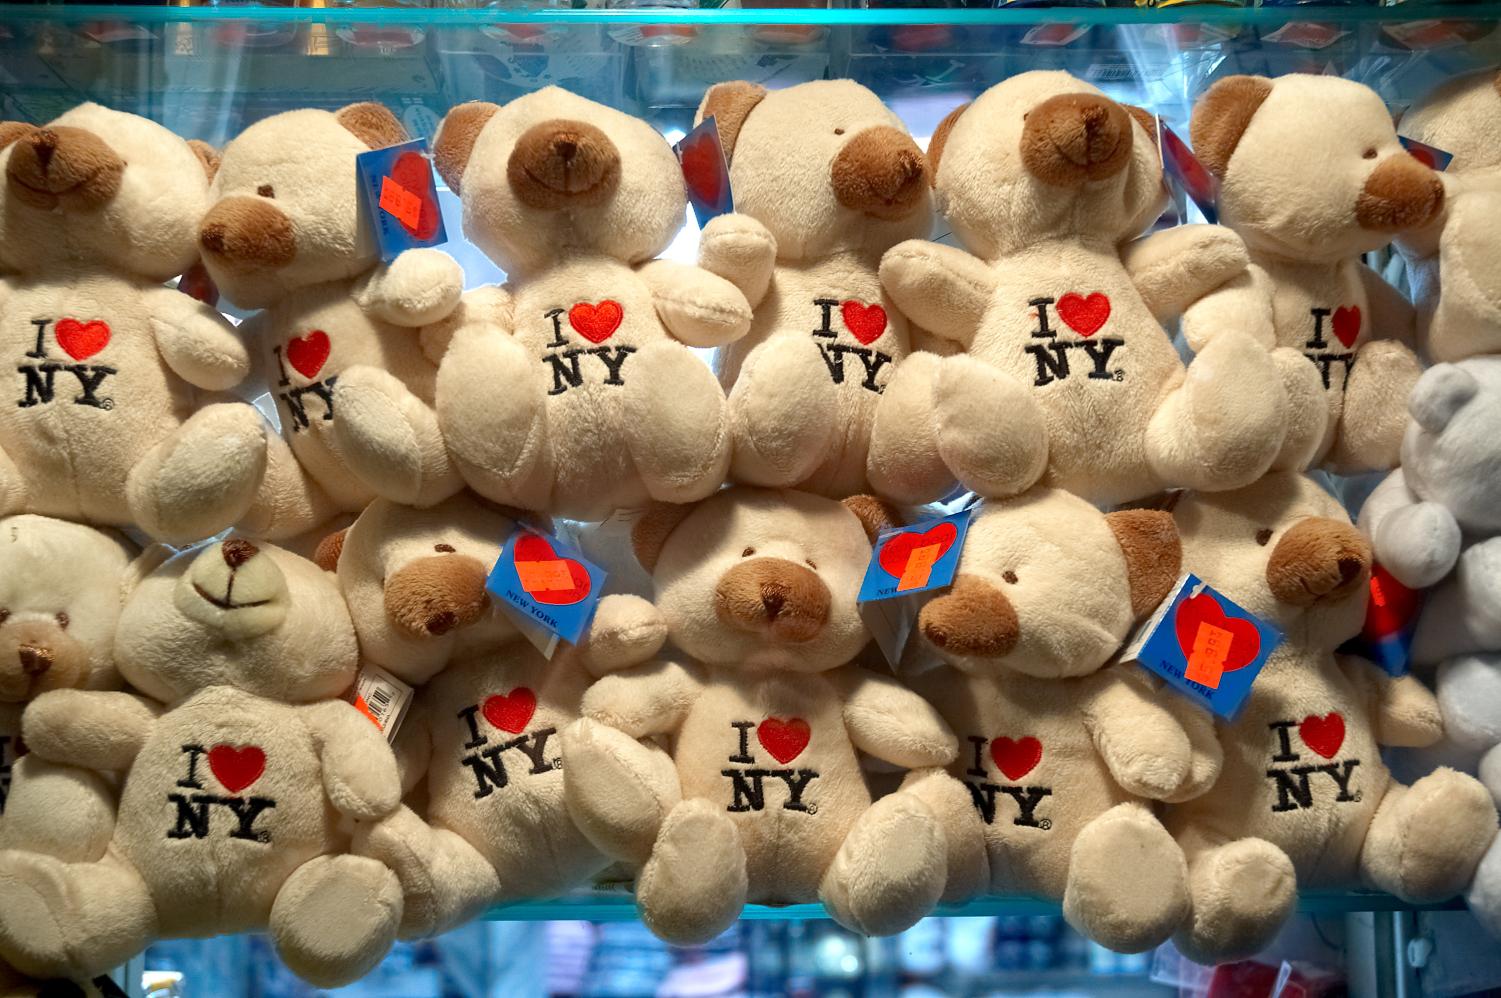 the i ny heart logo on a number of stuffed bears